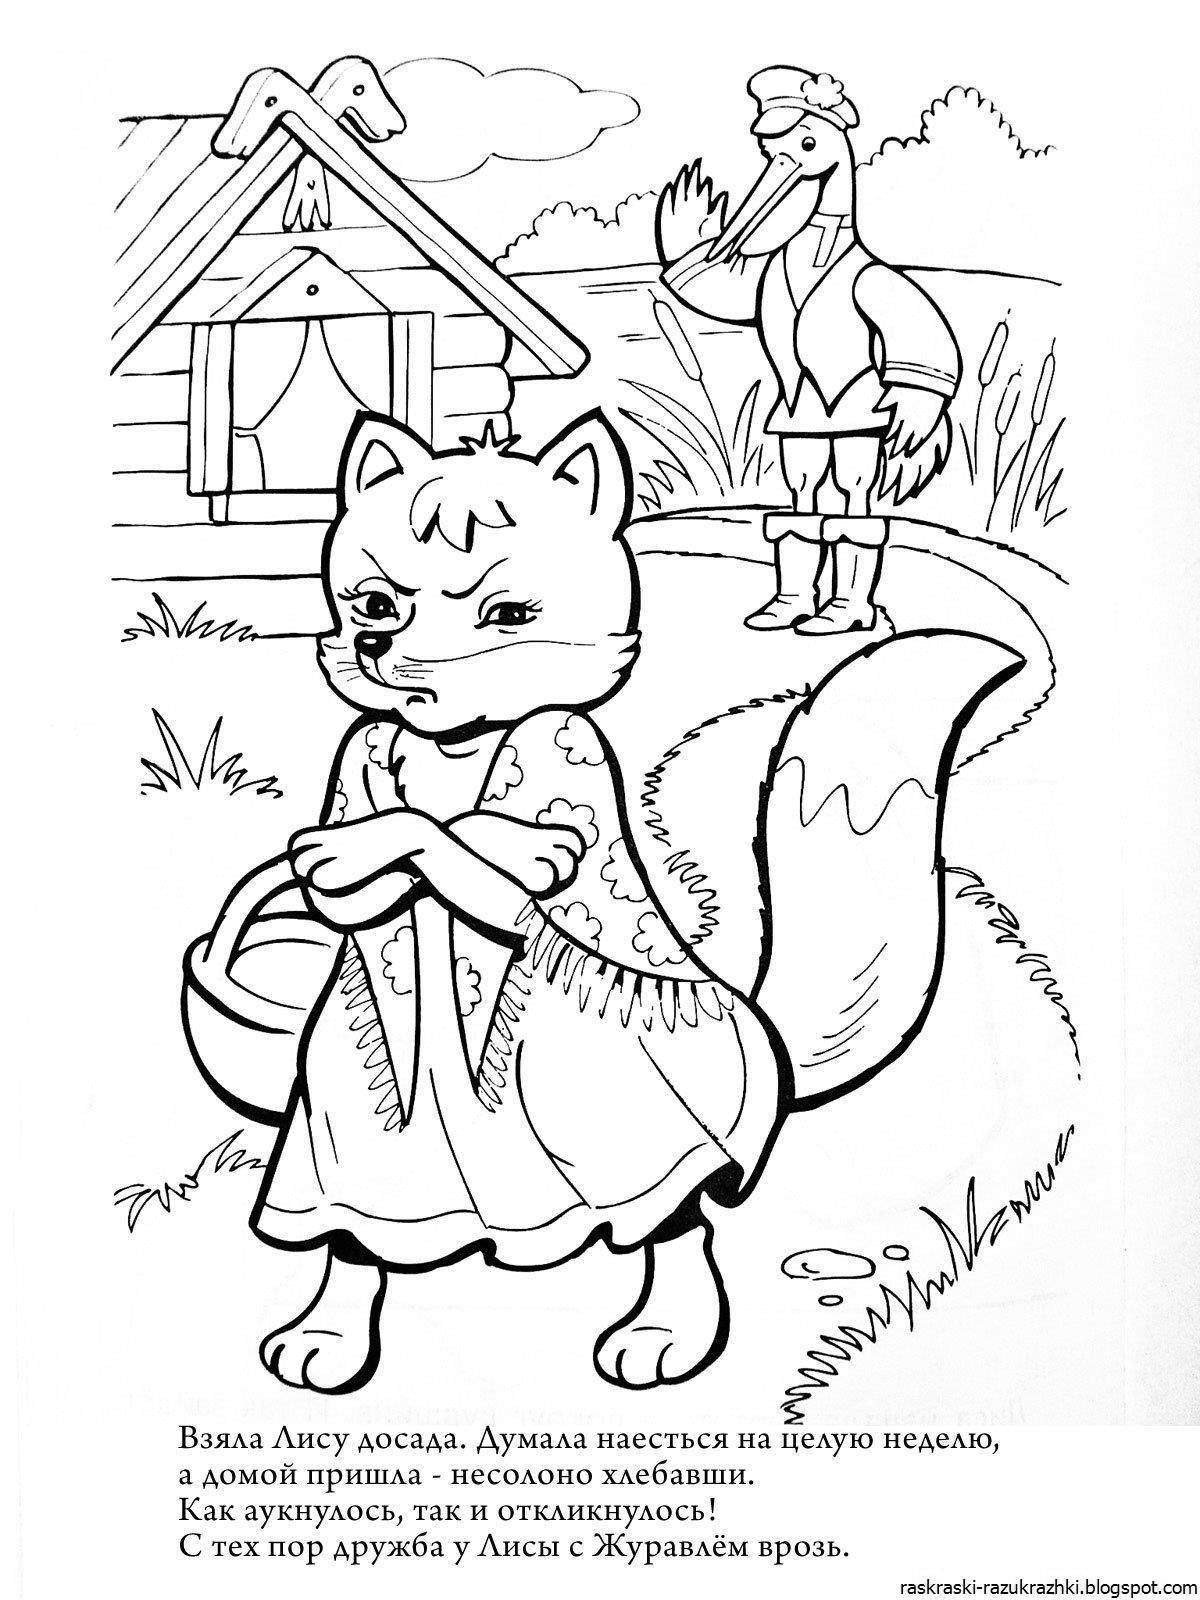 Vivacious coloring page fox с булочкой на носу